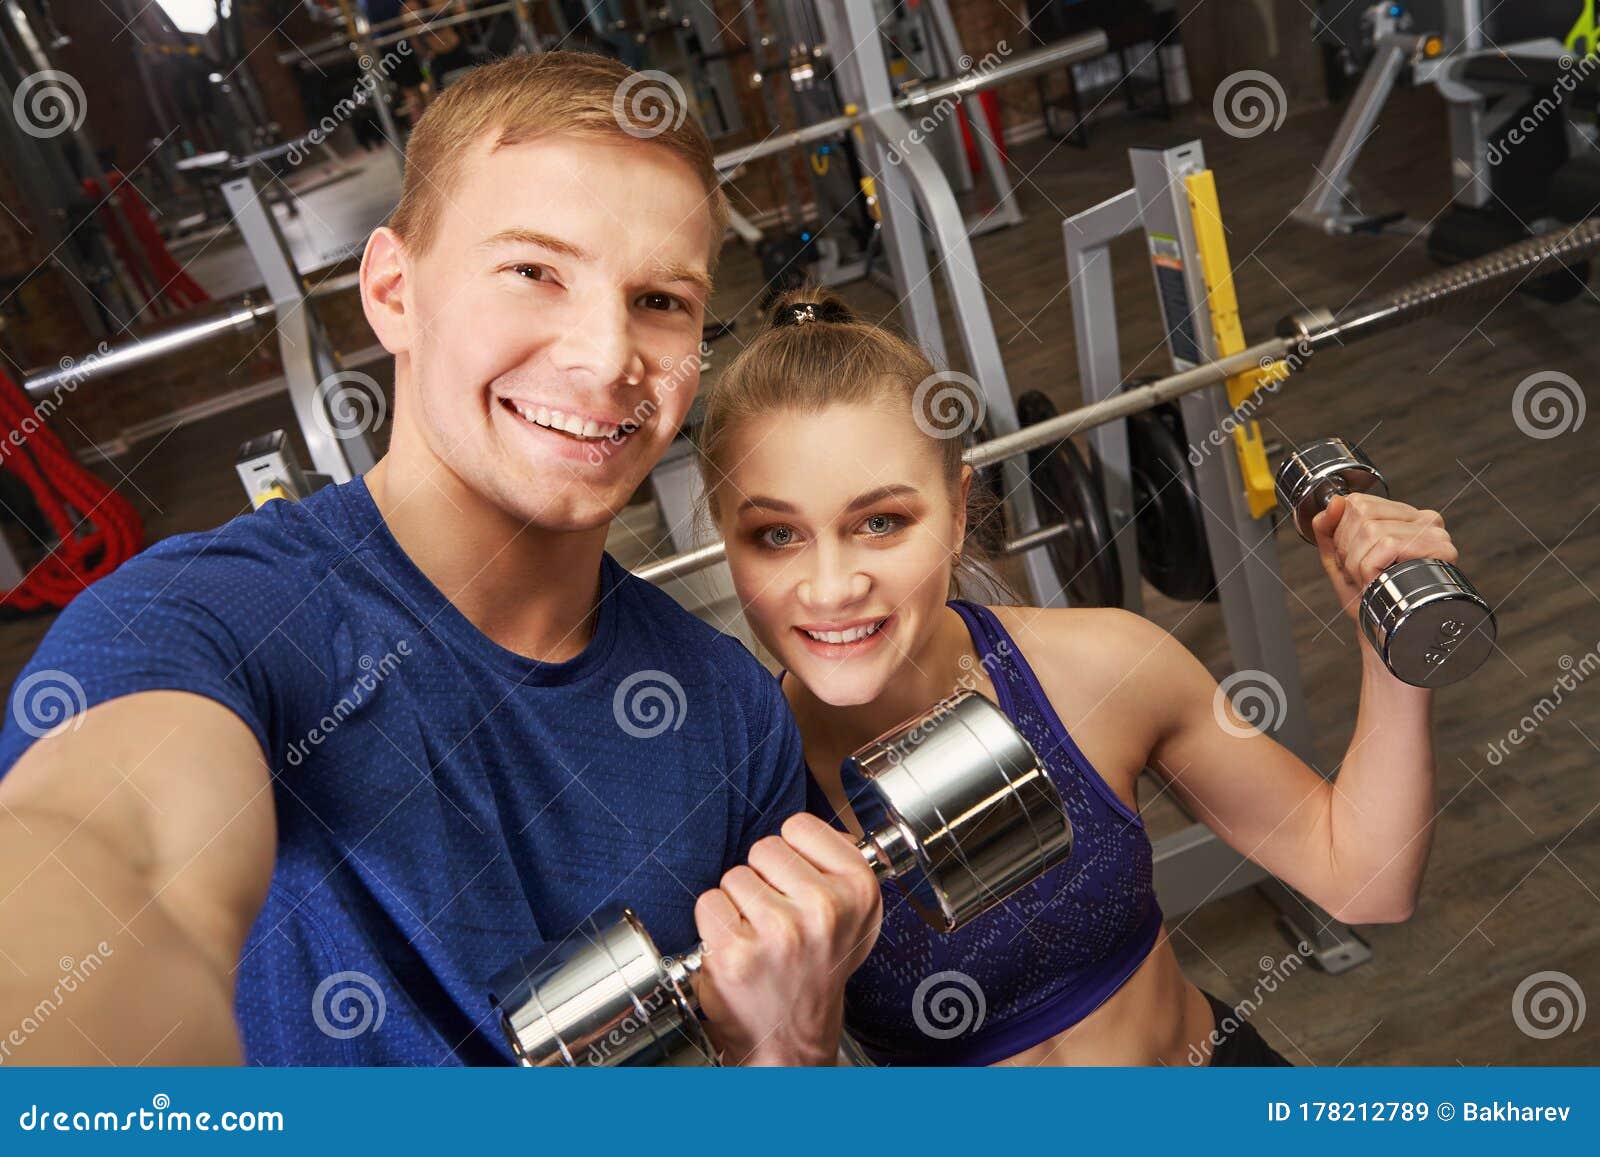 fitness couple selfie